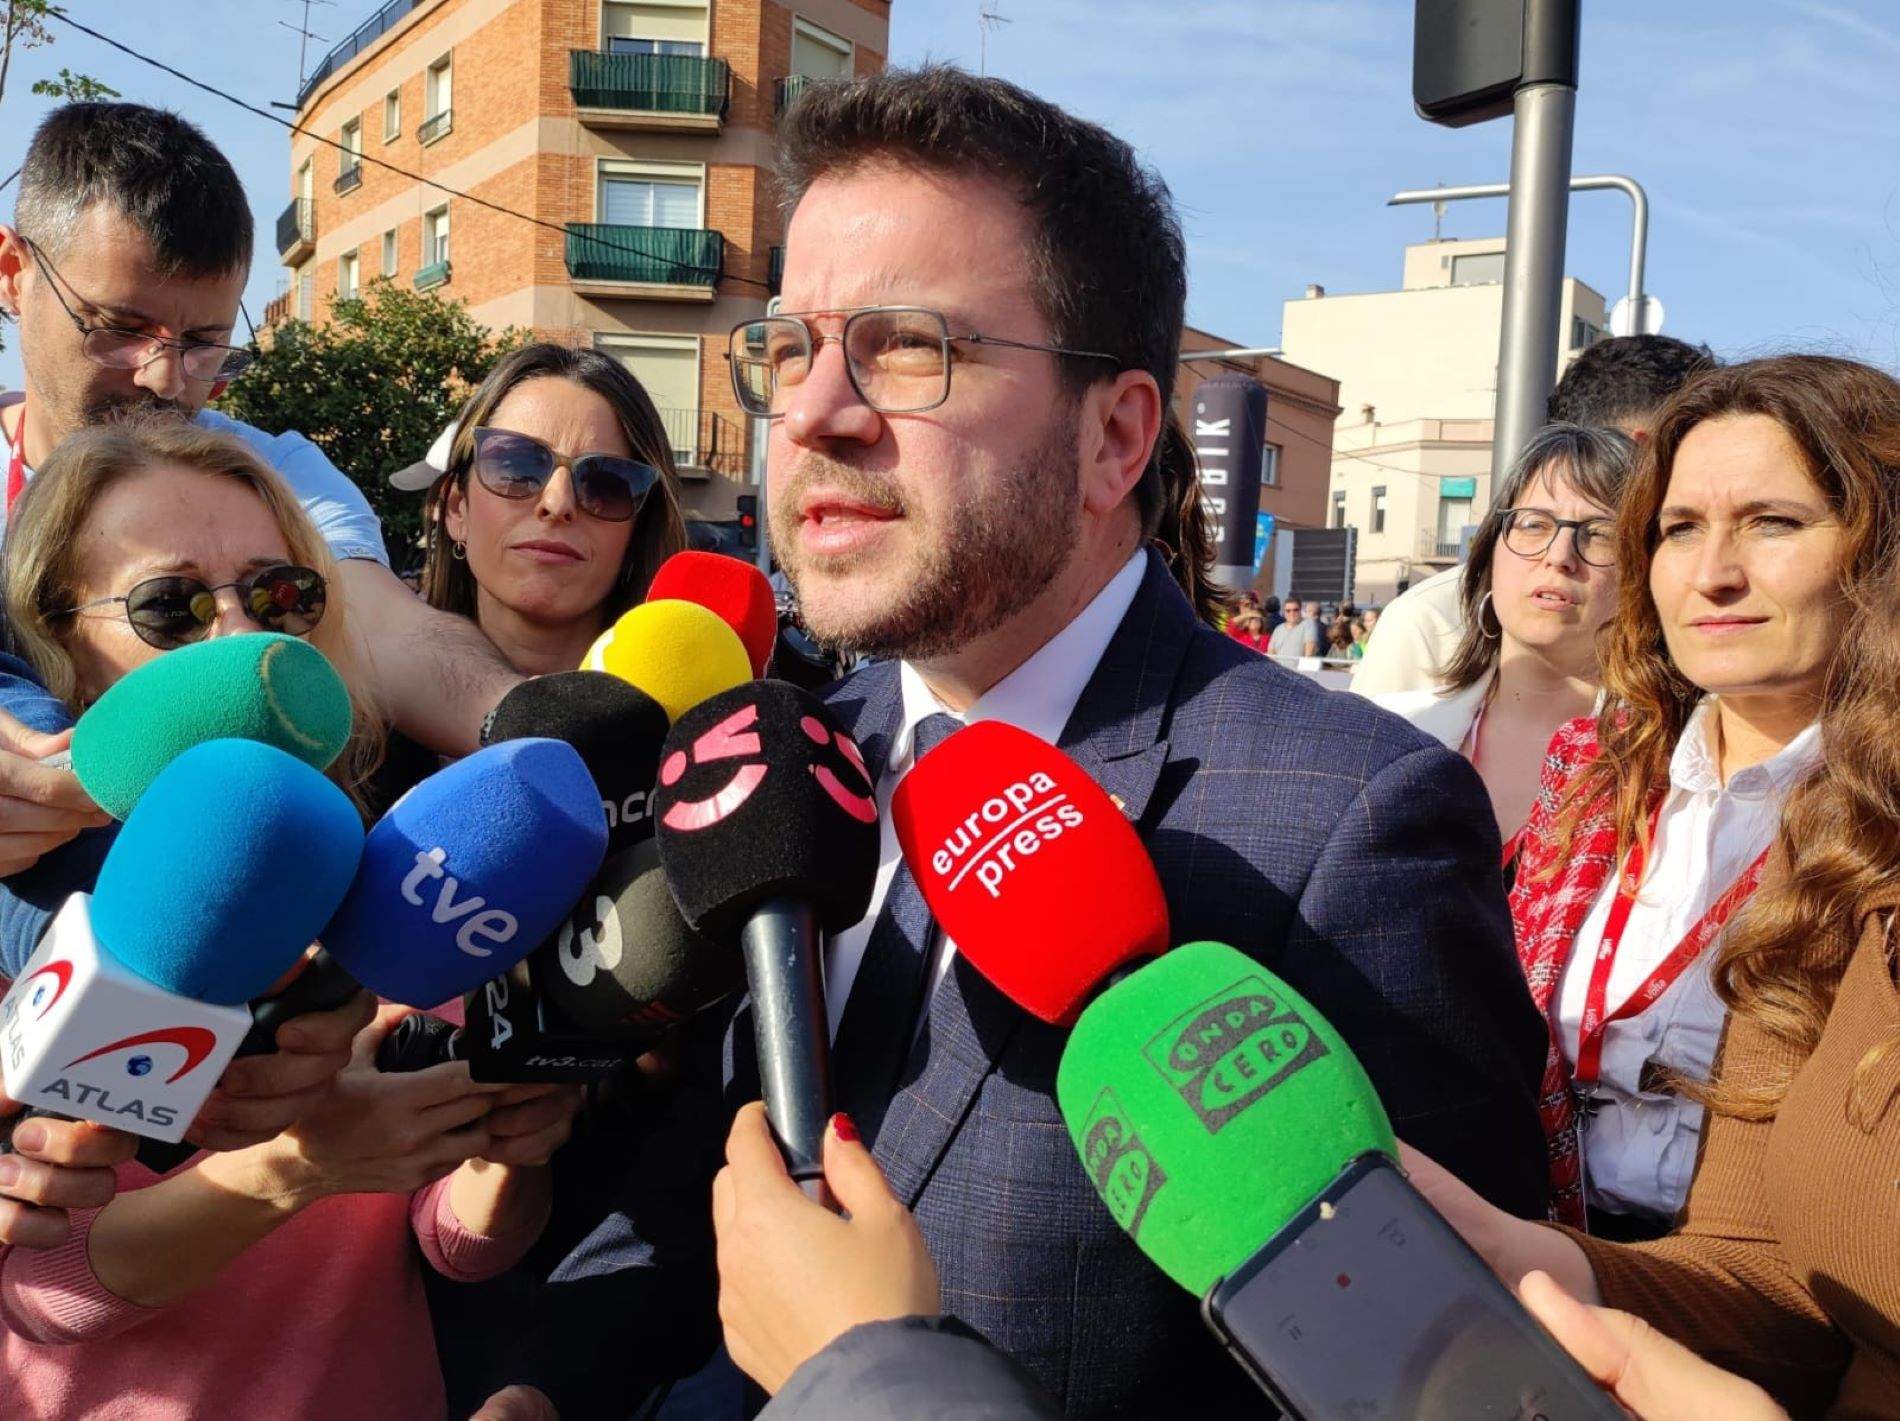 Aragonès desea que Puigdemont defienda su candidatura en "libertad", pero con reproches